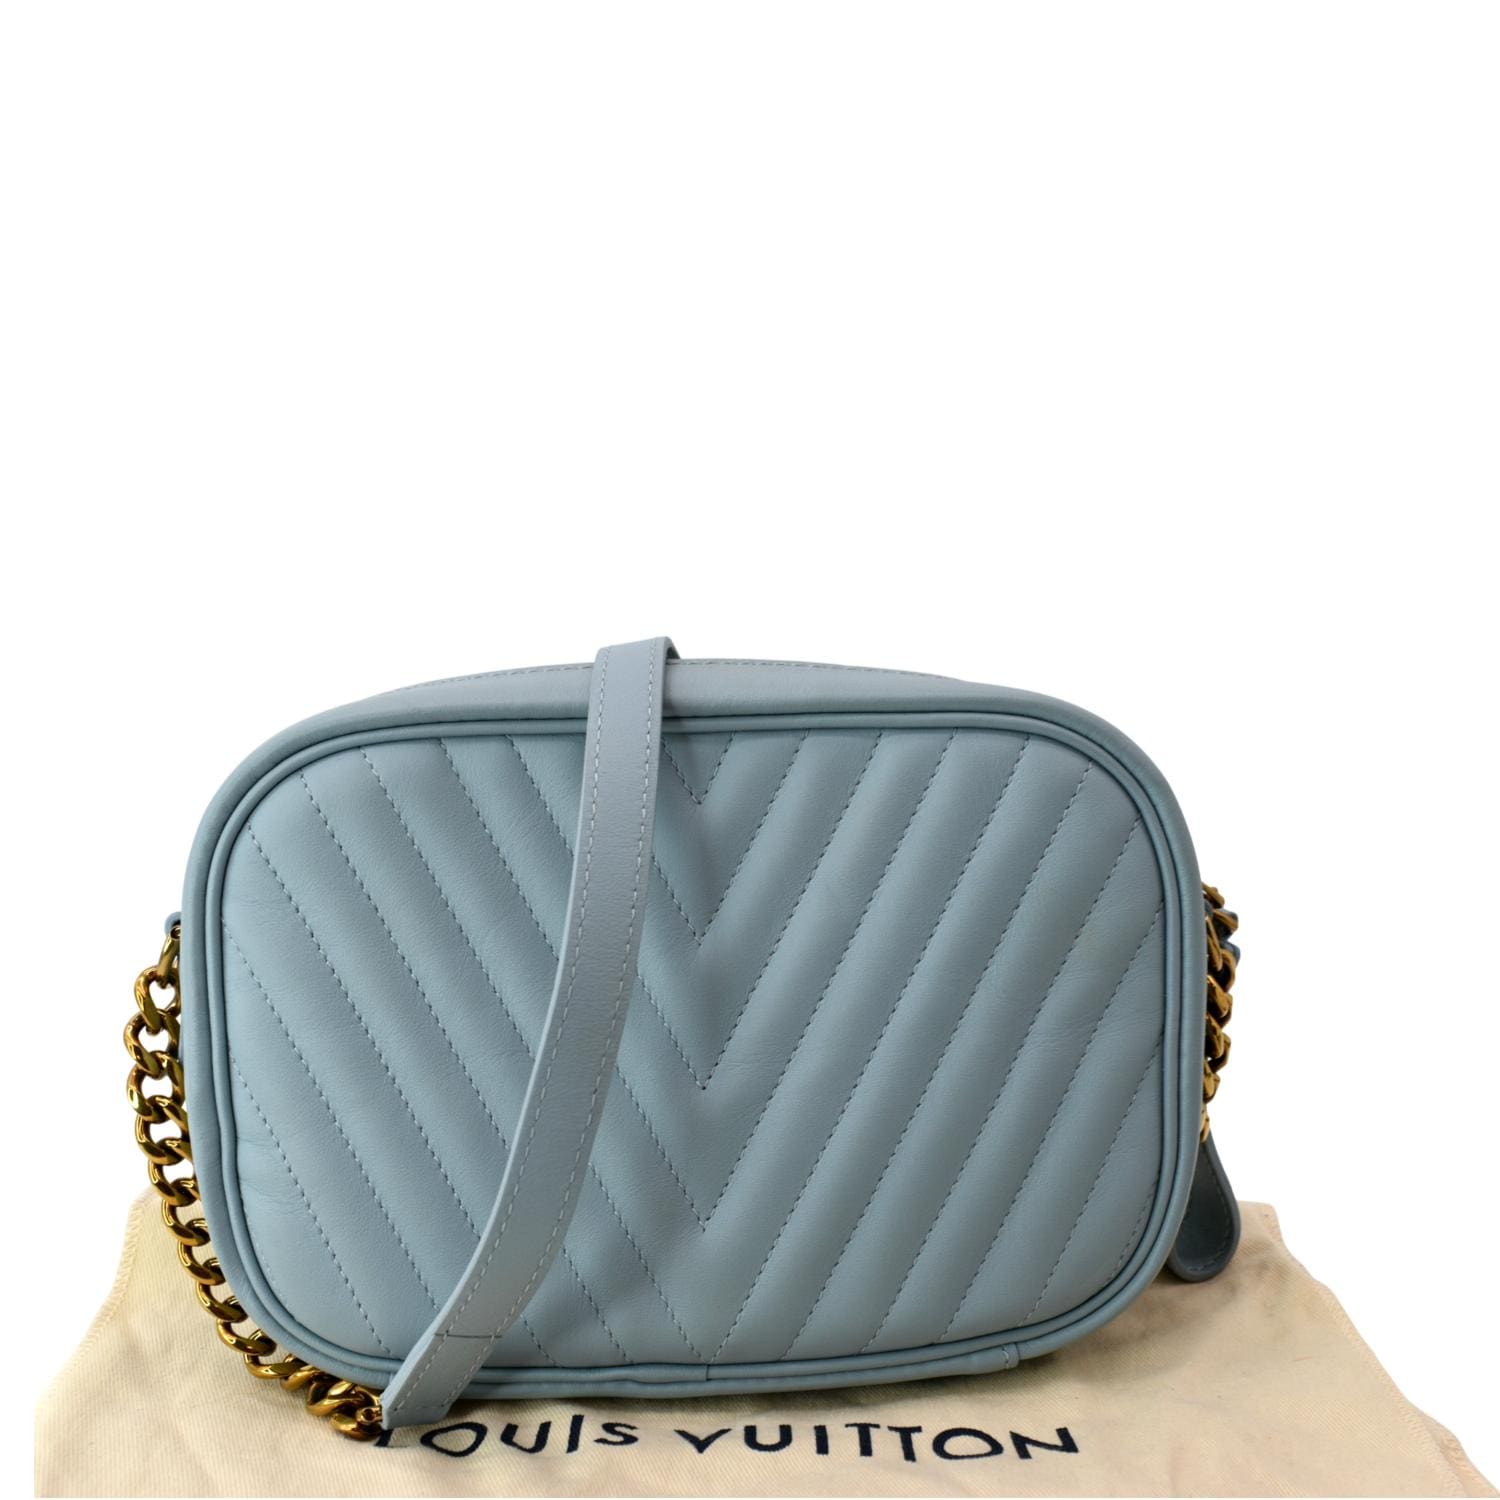 Louis Vuitton camera bag is a camera itself